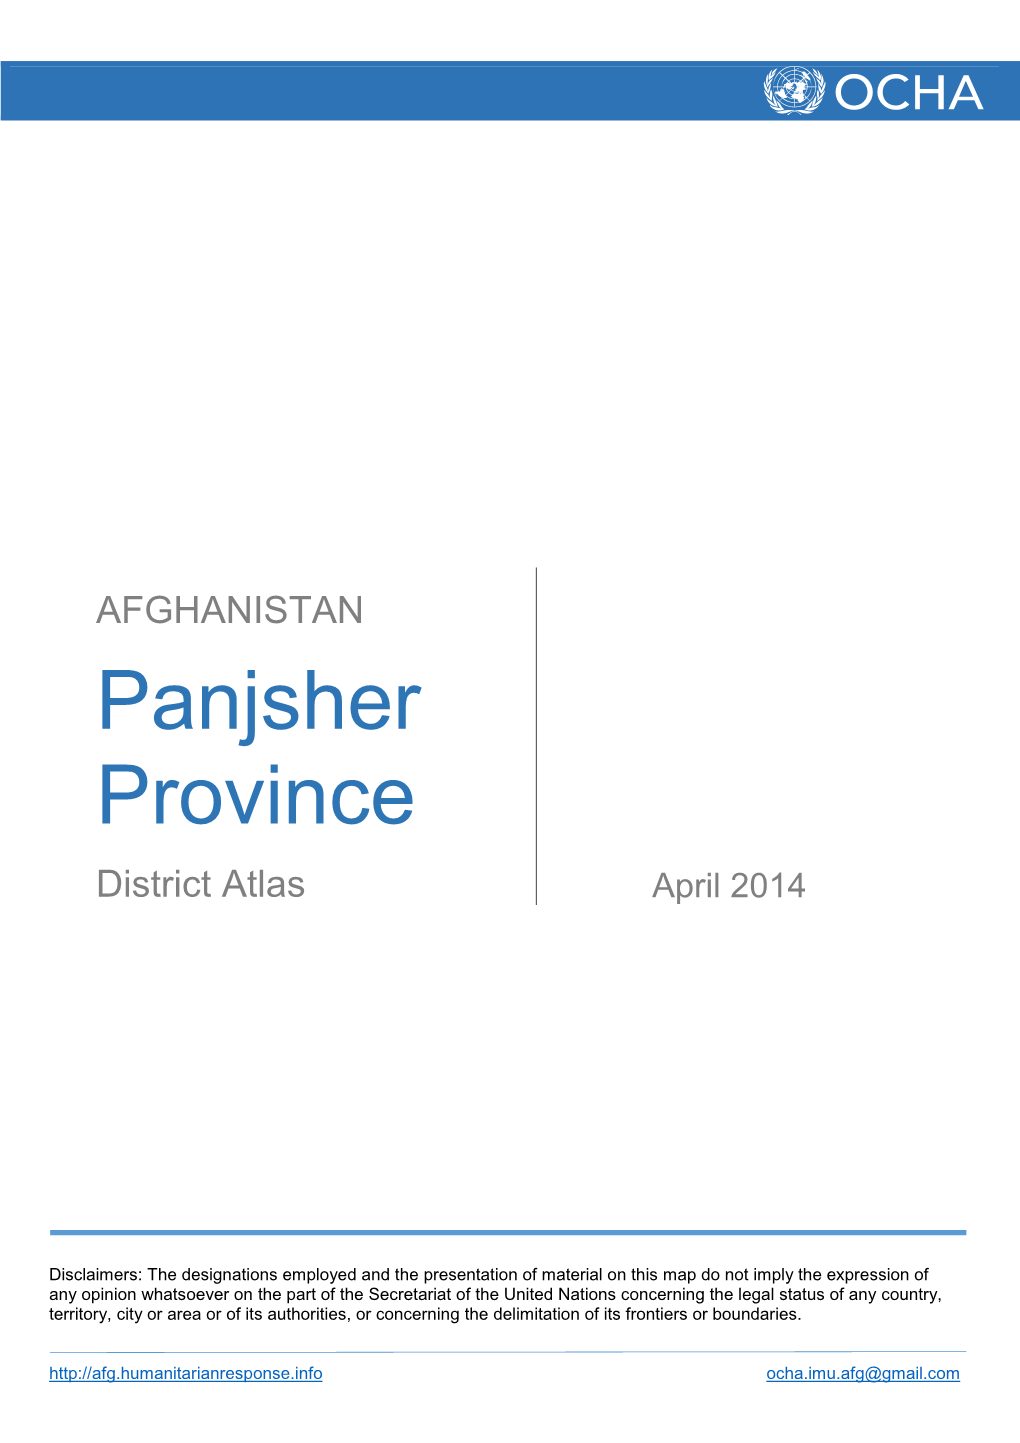 Afghanistan; Panjsher Province